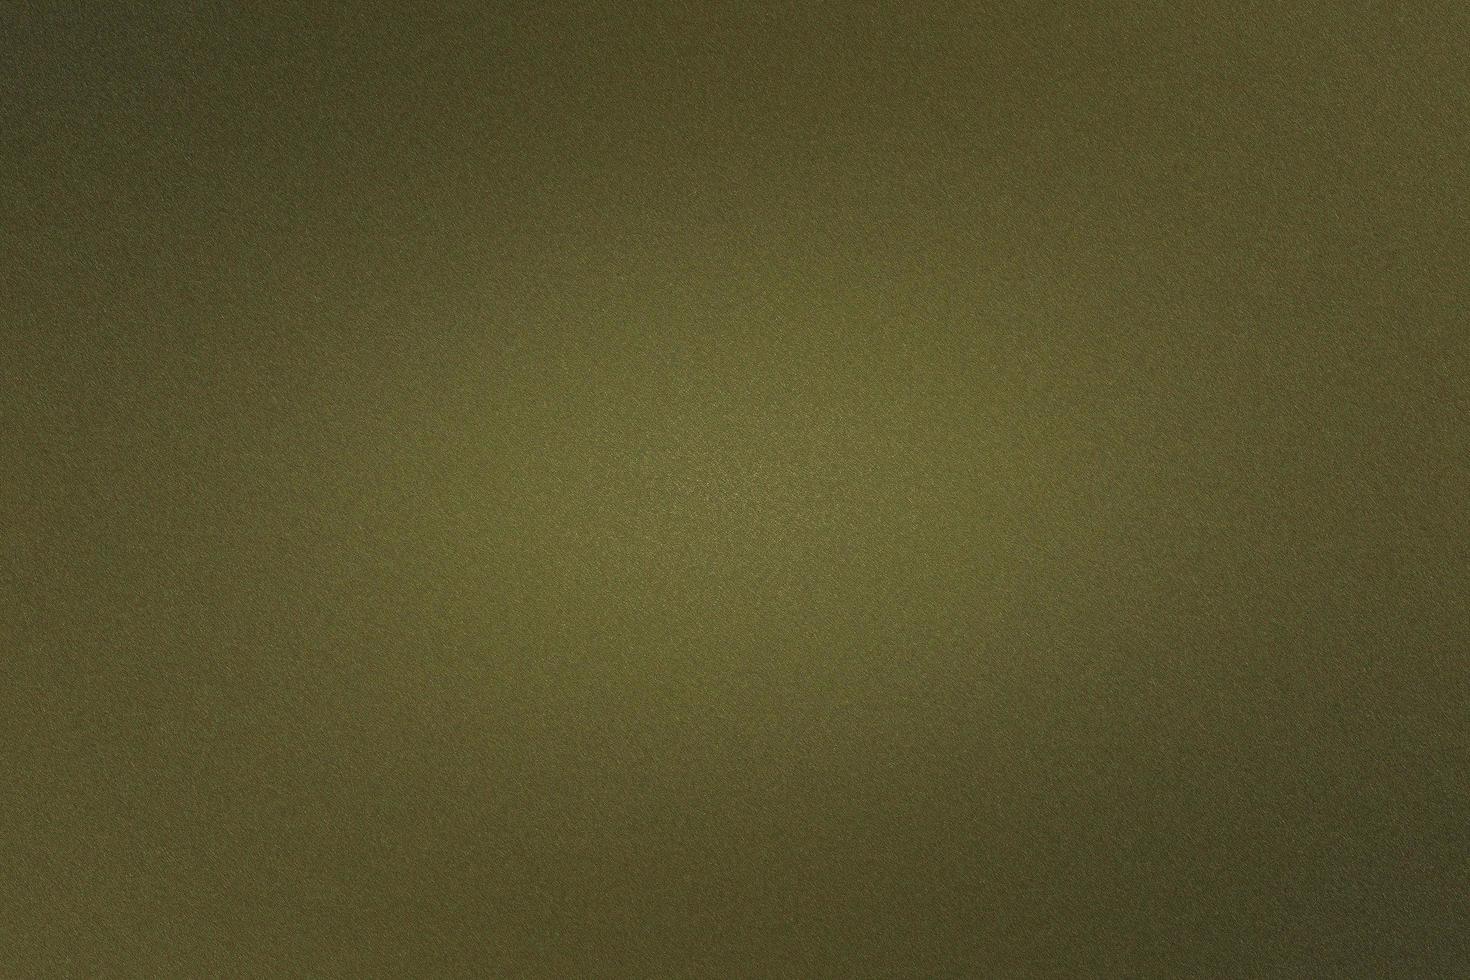 Texture of thin dark green metallic, abstract background photo